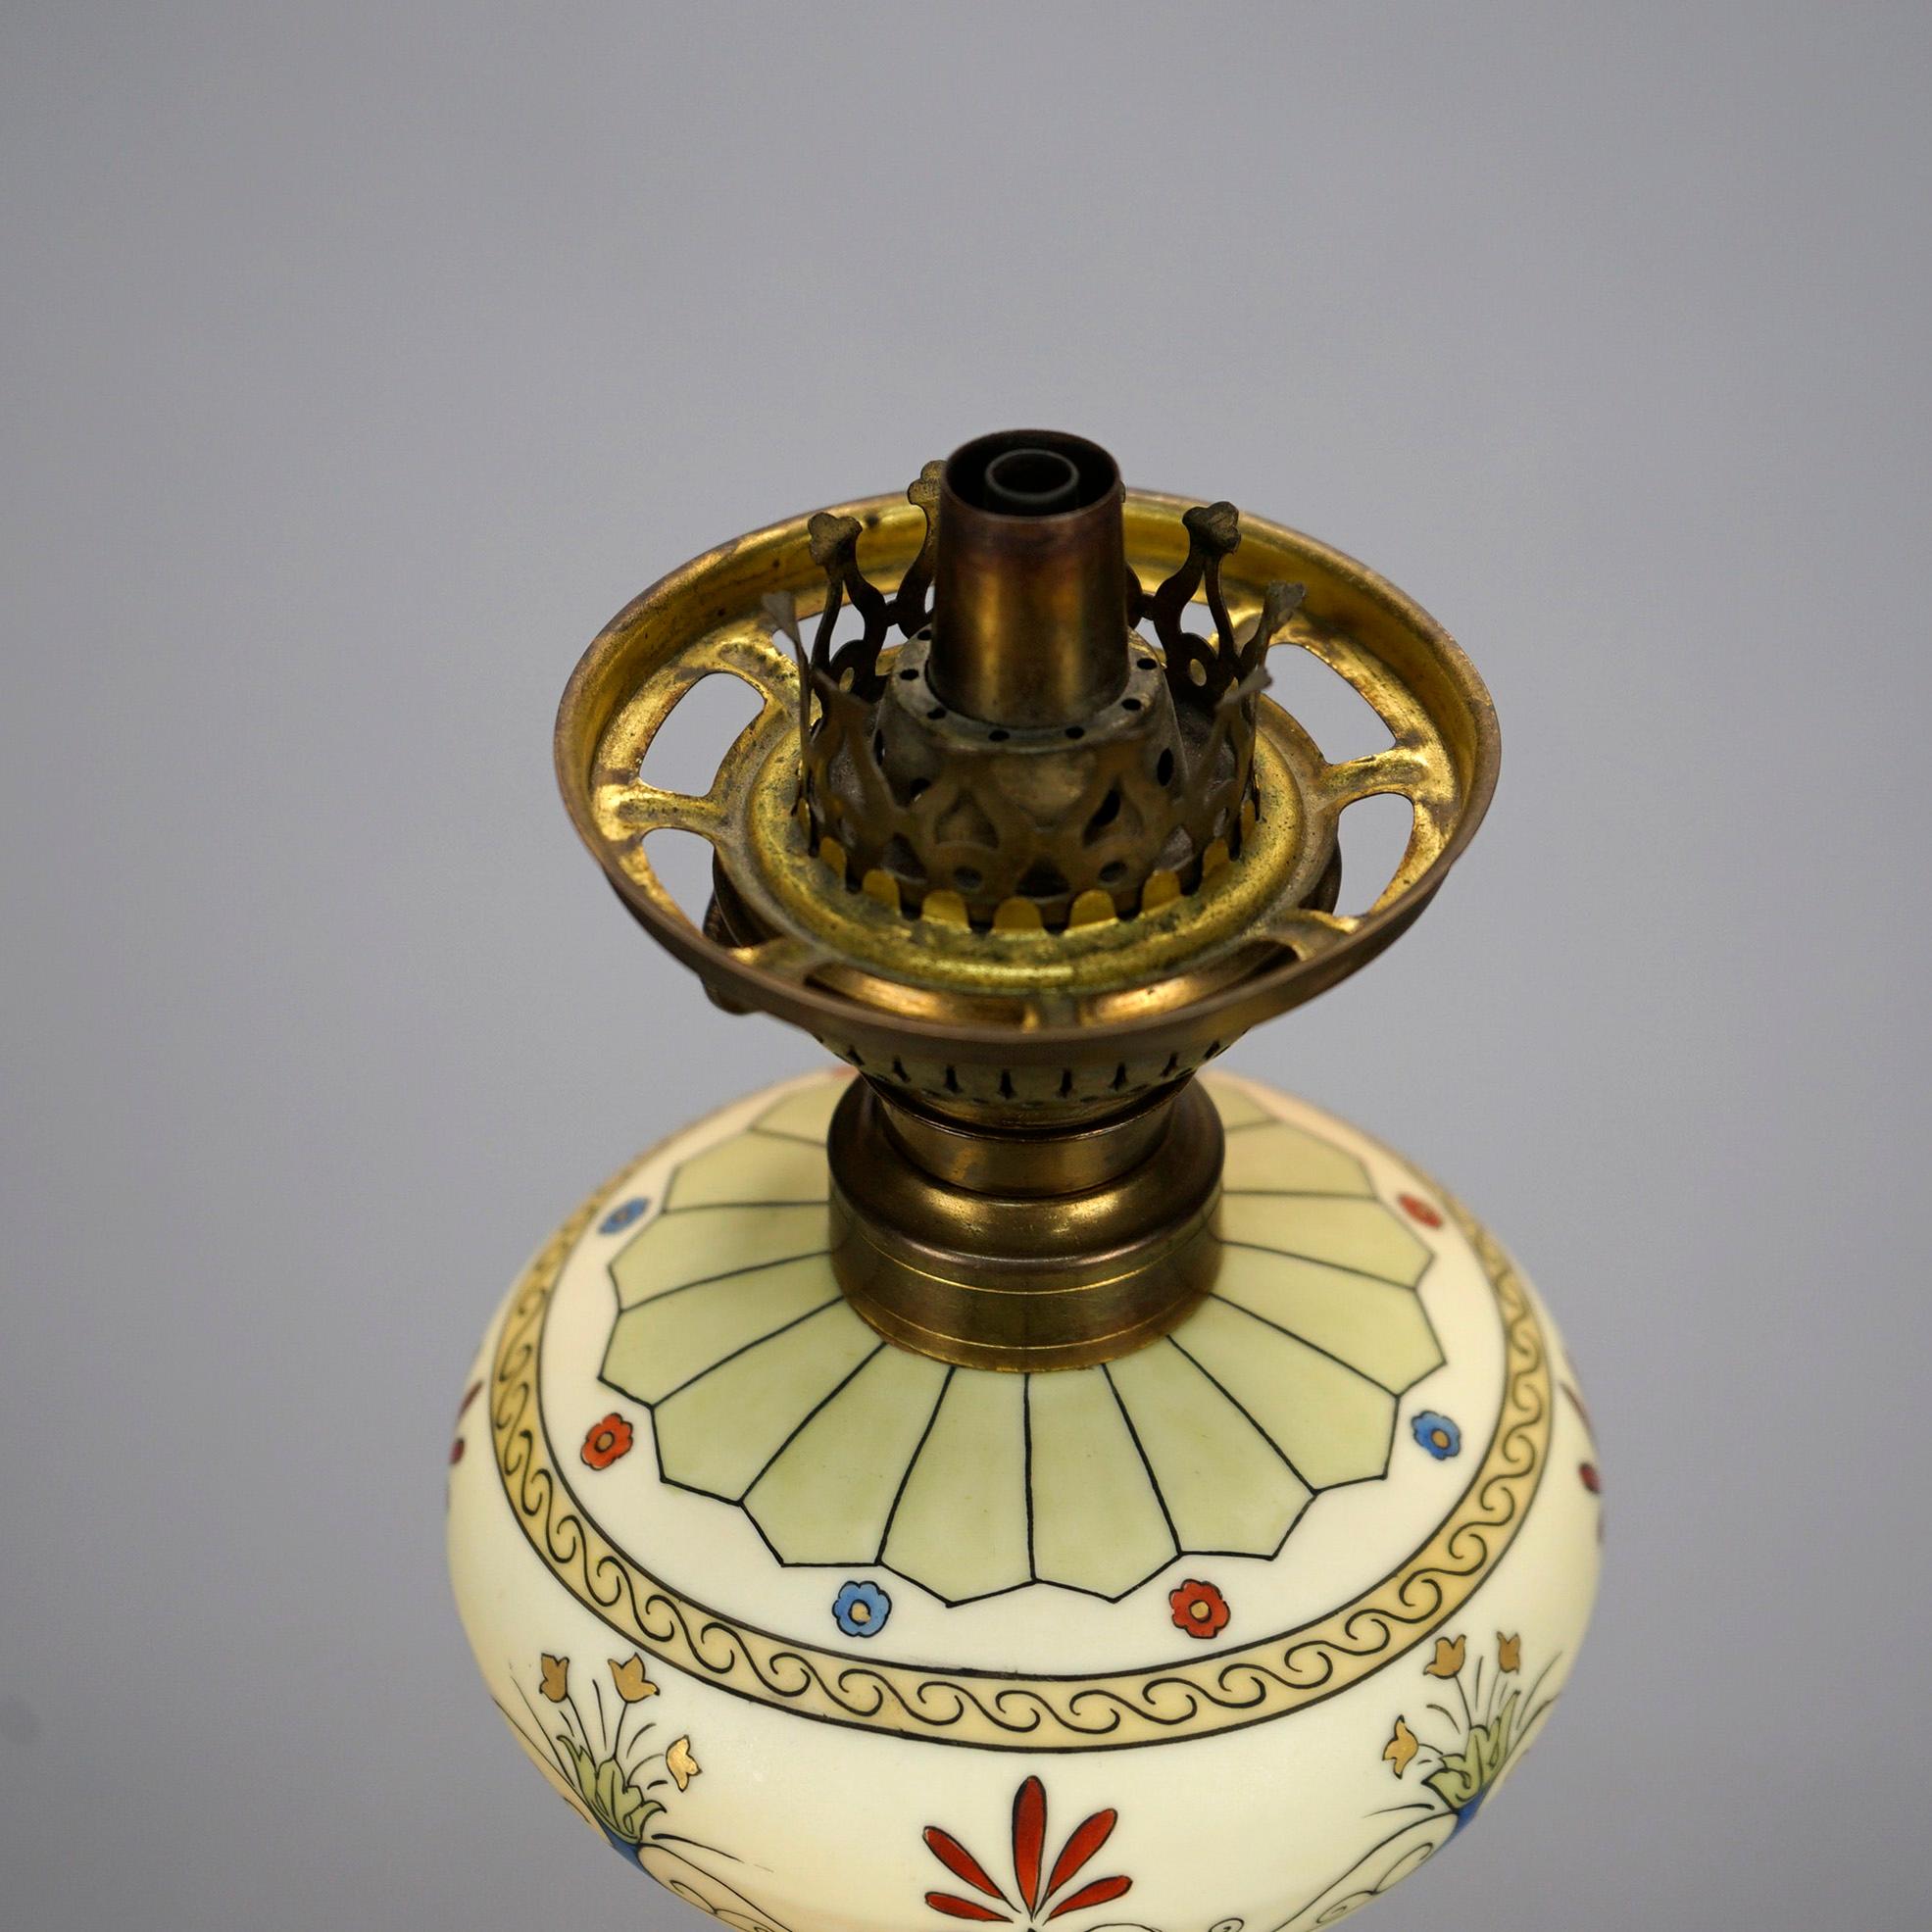 Antique Italian Hand Painted Porcelain Banquet Oil Lamp with Genre Scene, 19th C 4